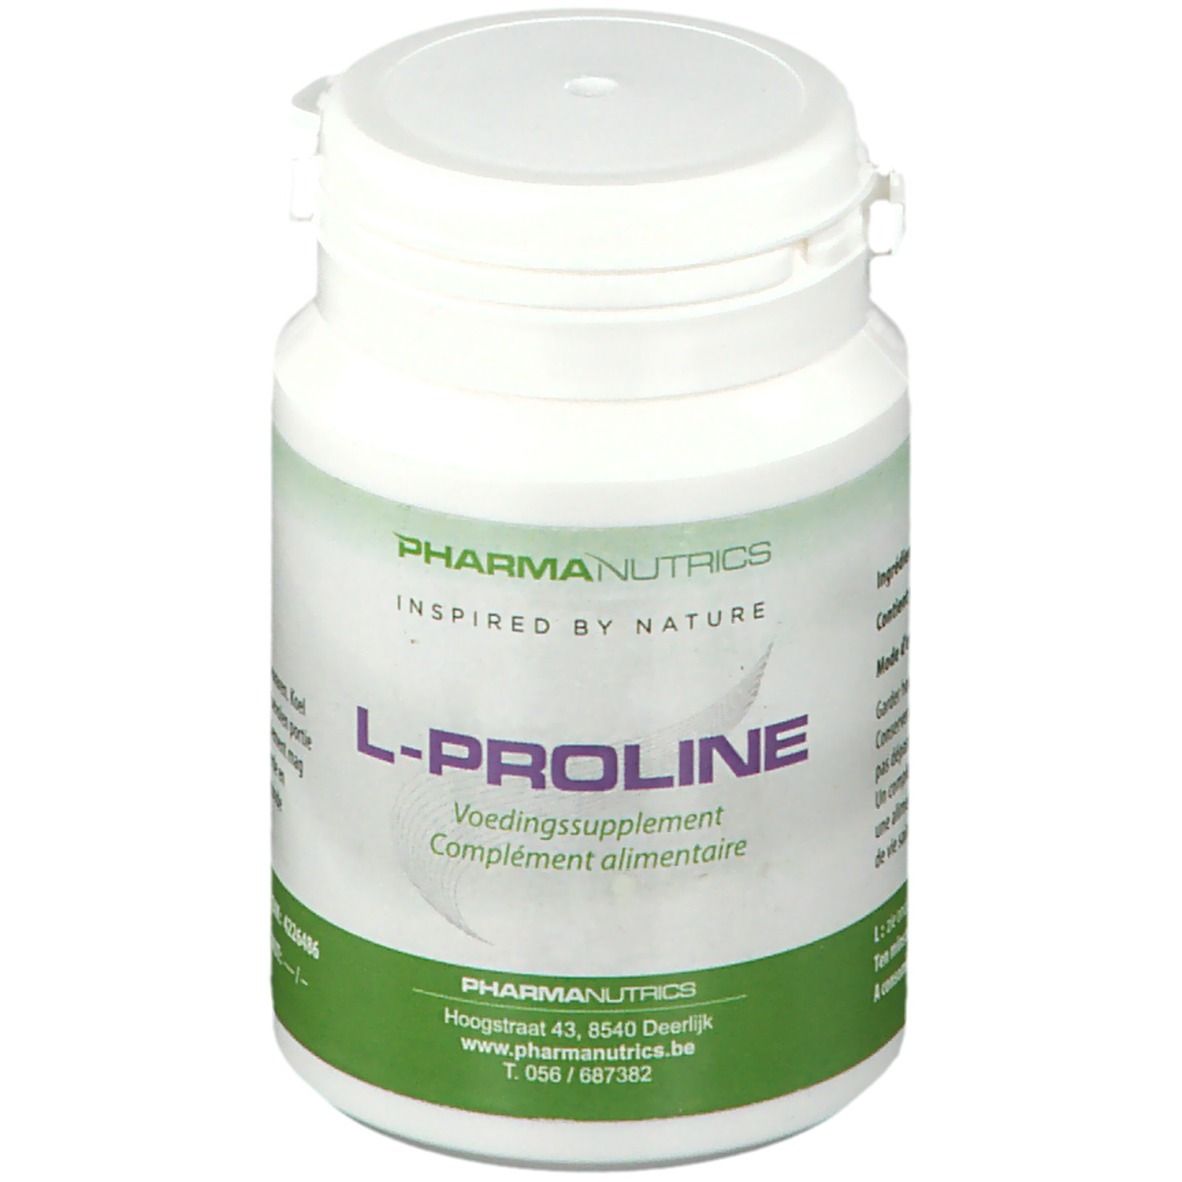 PharmaNutrics L-Proline